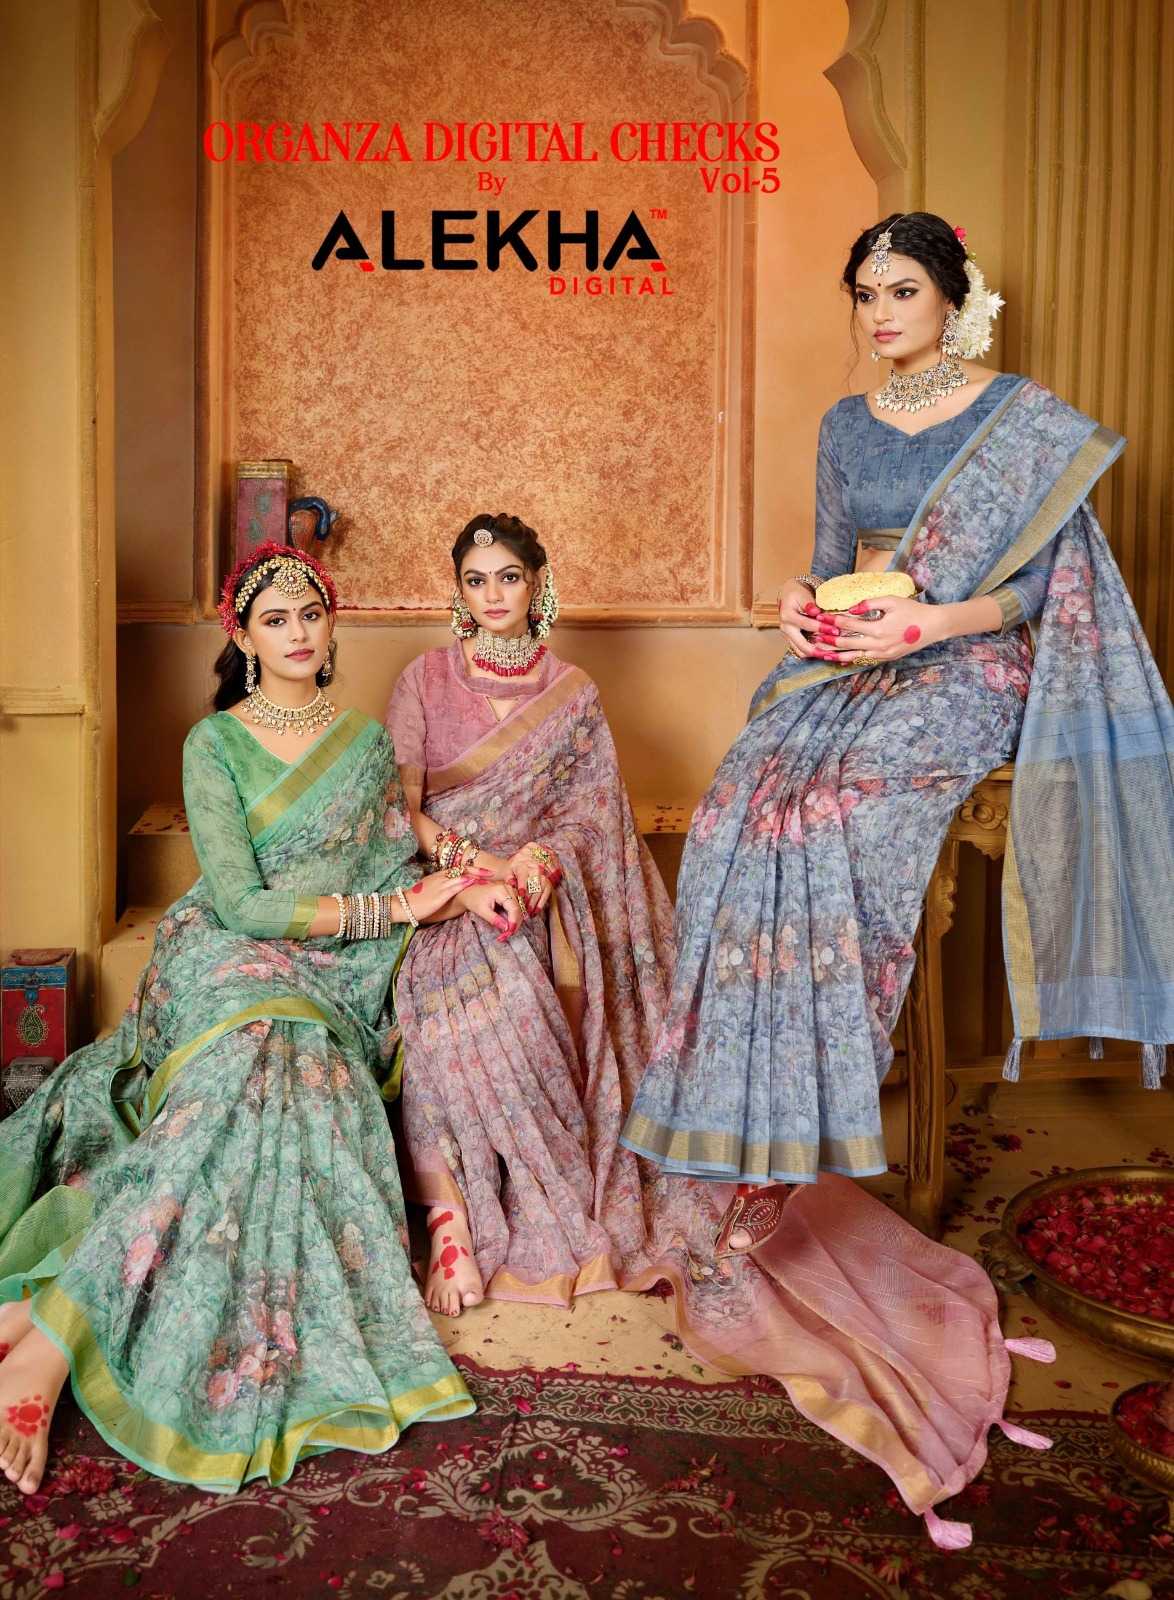 alekha organza digital checks vol 5 25411-25416 beautiful digital print sarees